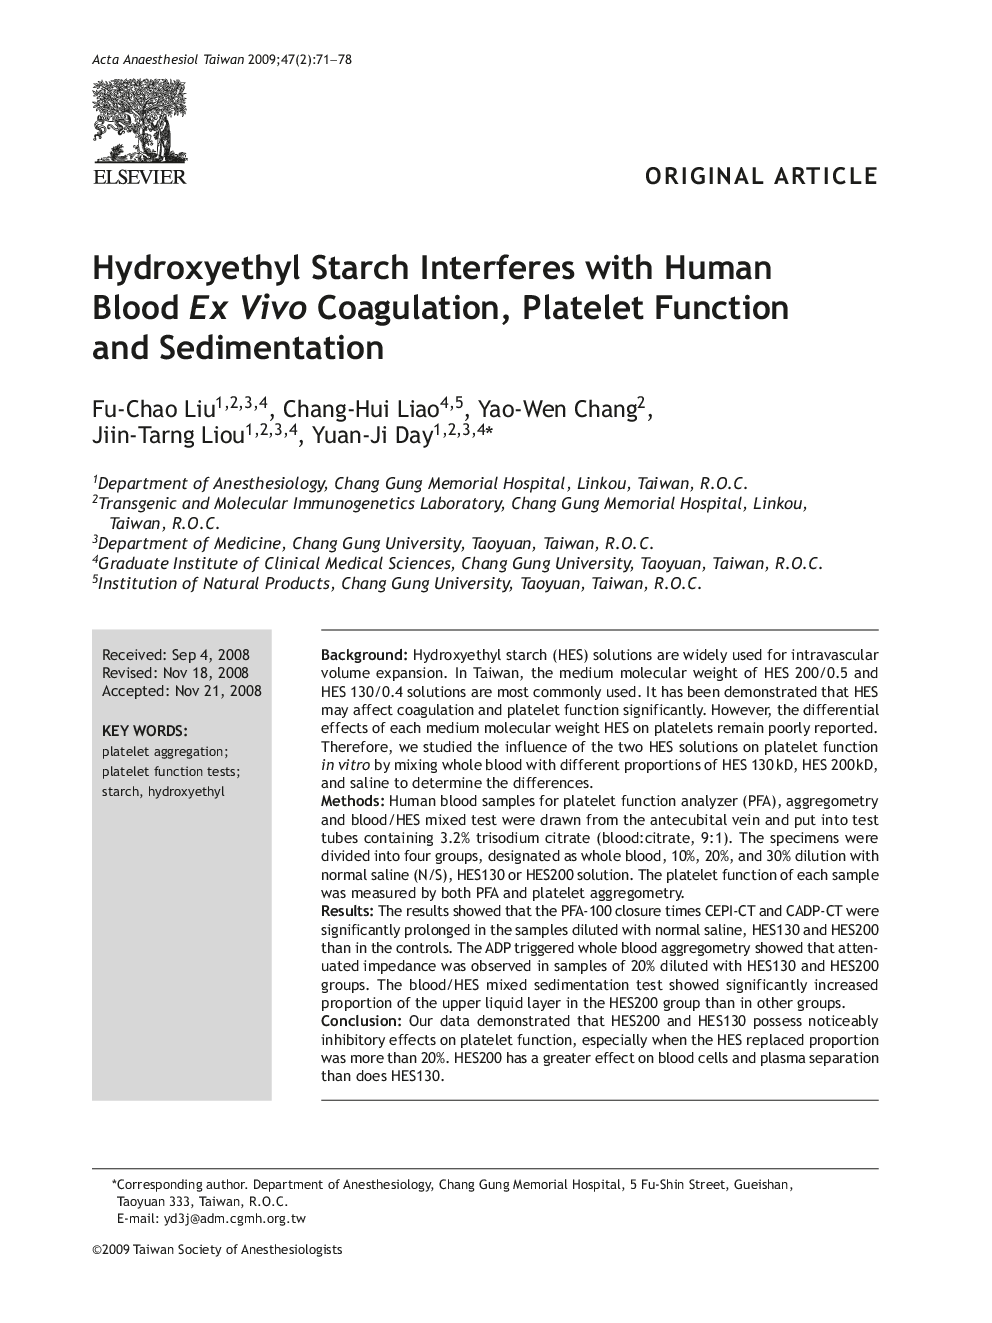 Hydroxyethyl Starch Interferes with Human Blood Ex Vivo Coagulation, Platelet Function and Sedimentation